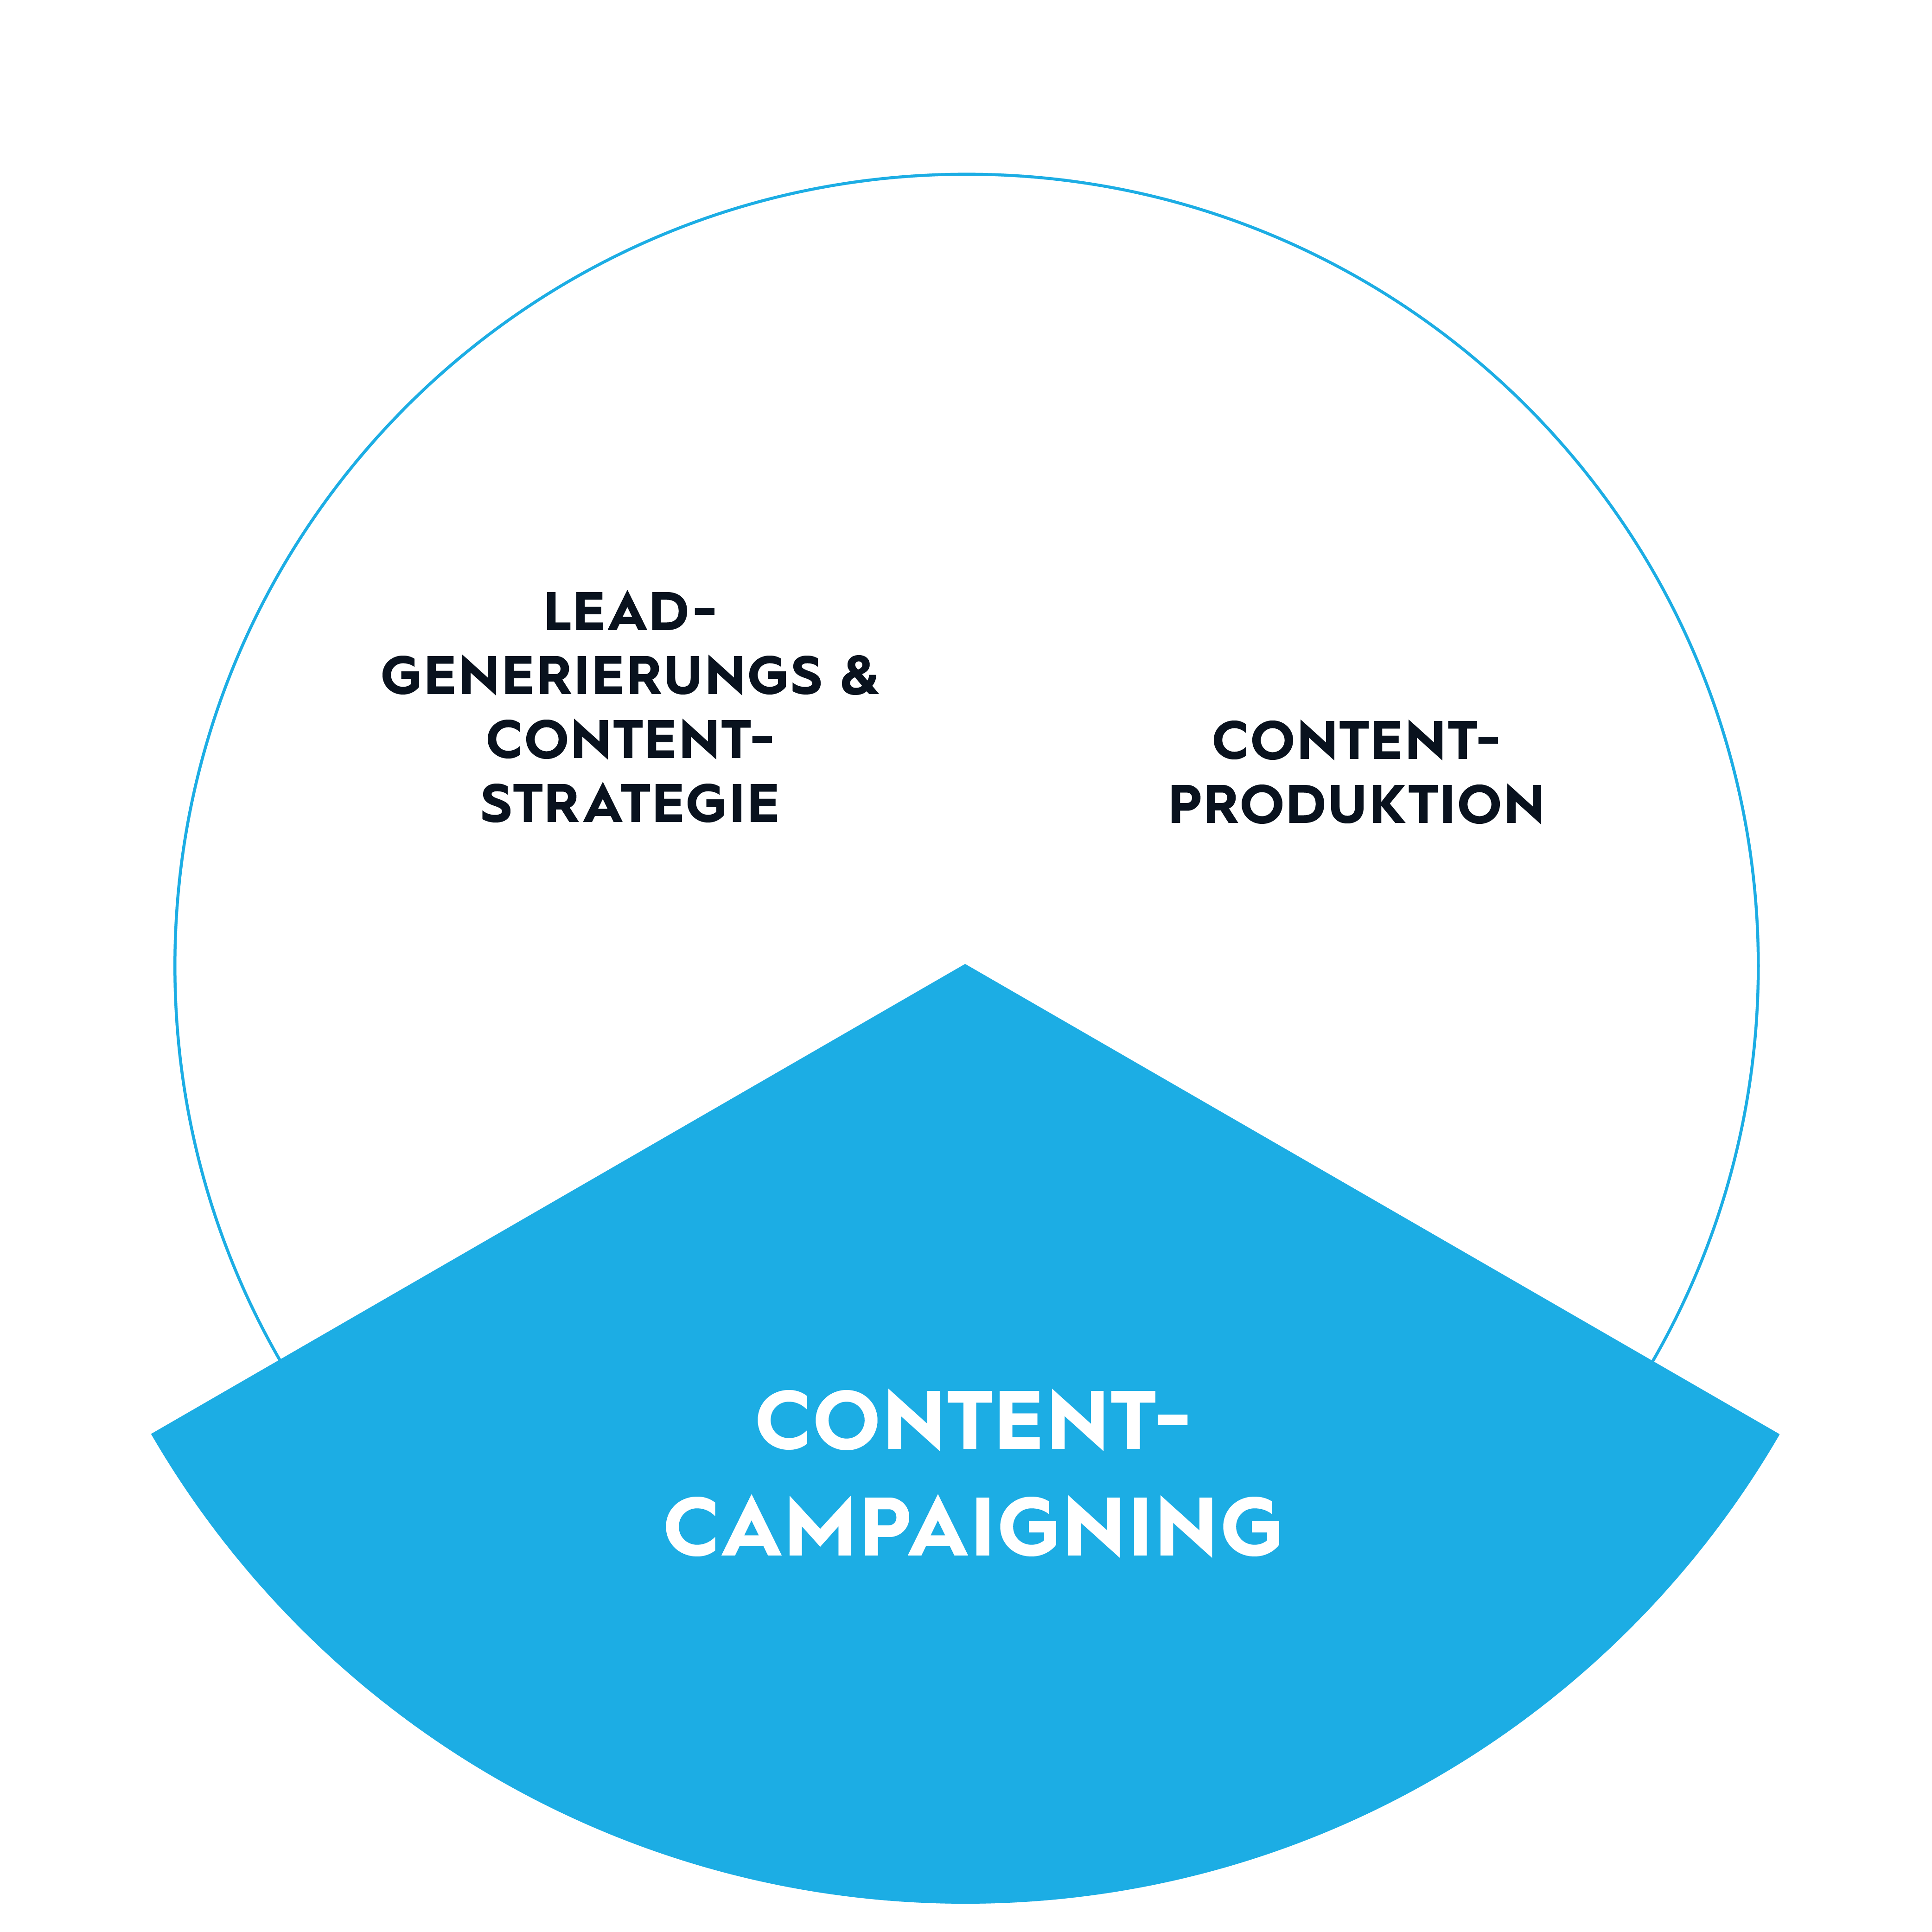 Content-Campaigning